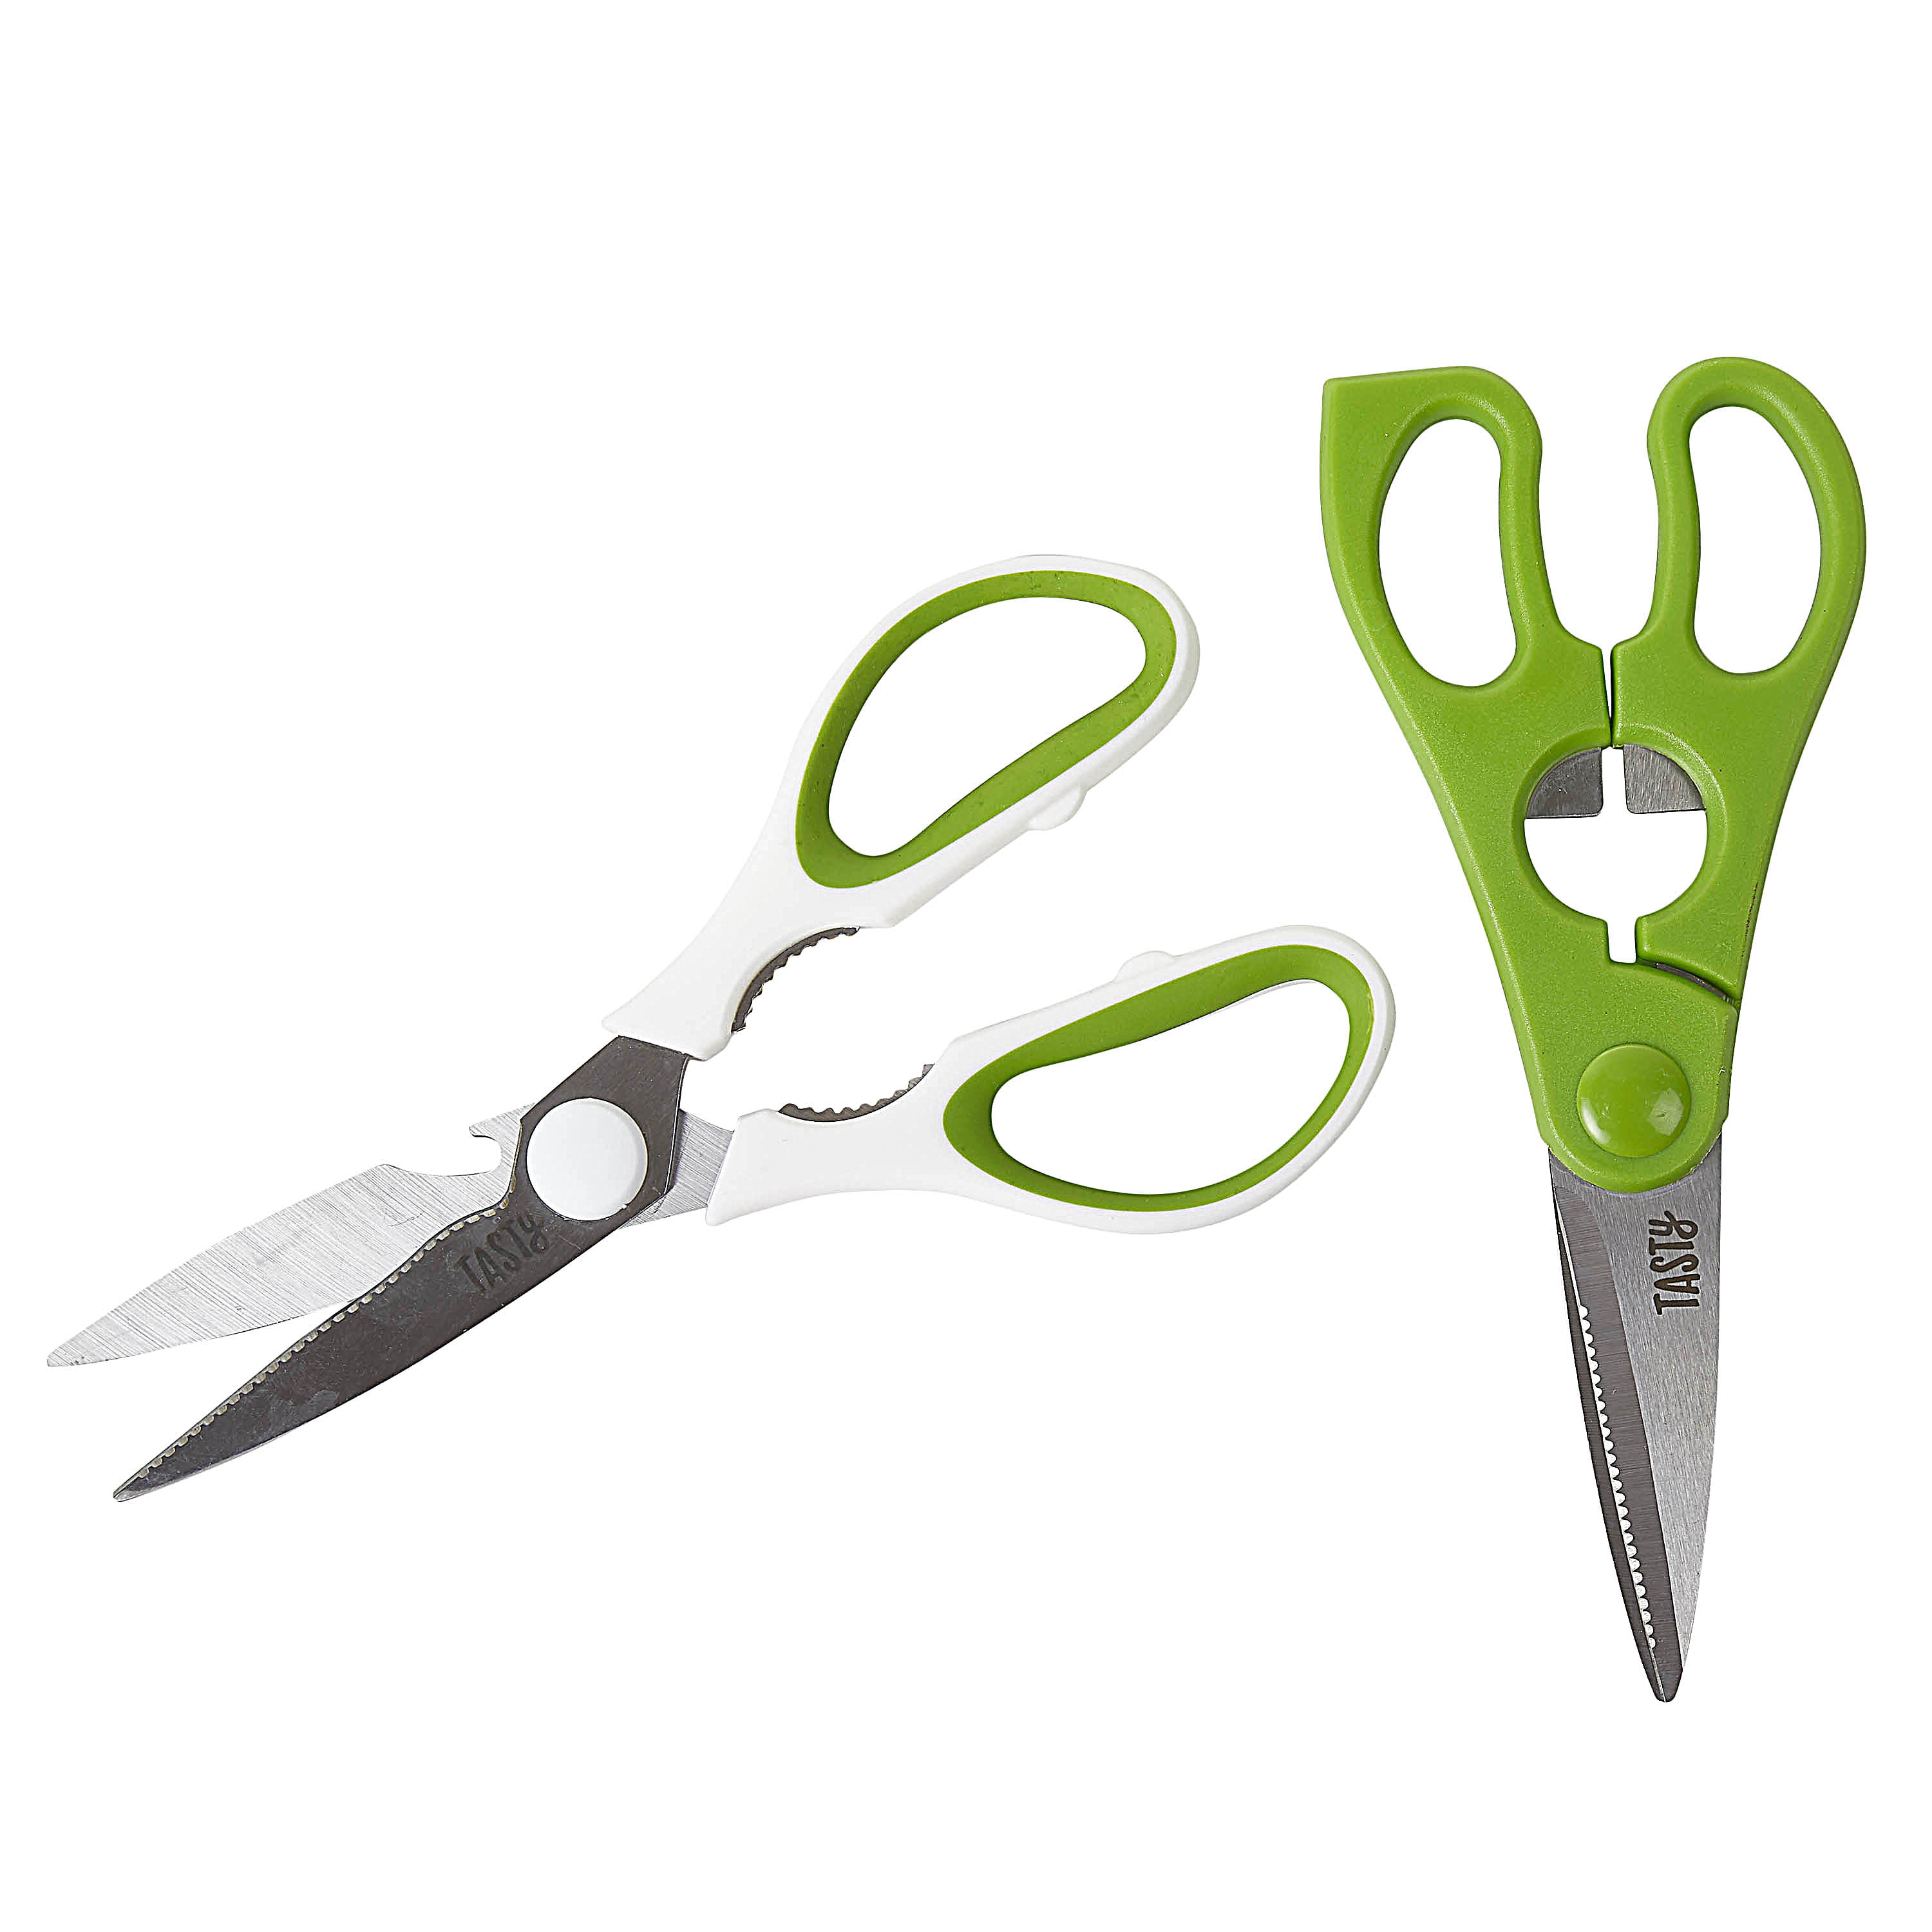 LIVINGO Kitchen Shears Heavy Duty: Cooking Scissors Dishwasher Safe Green